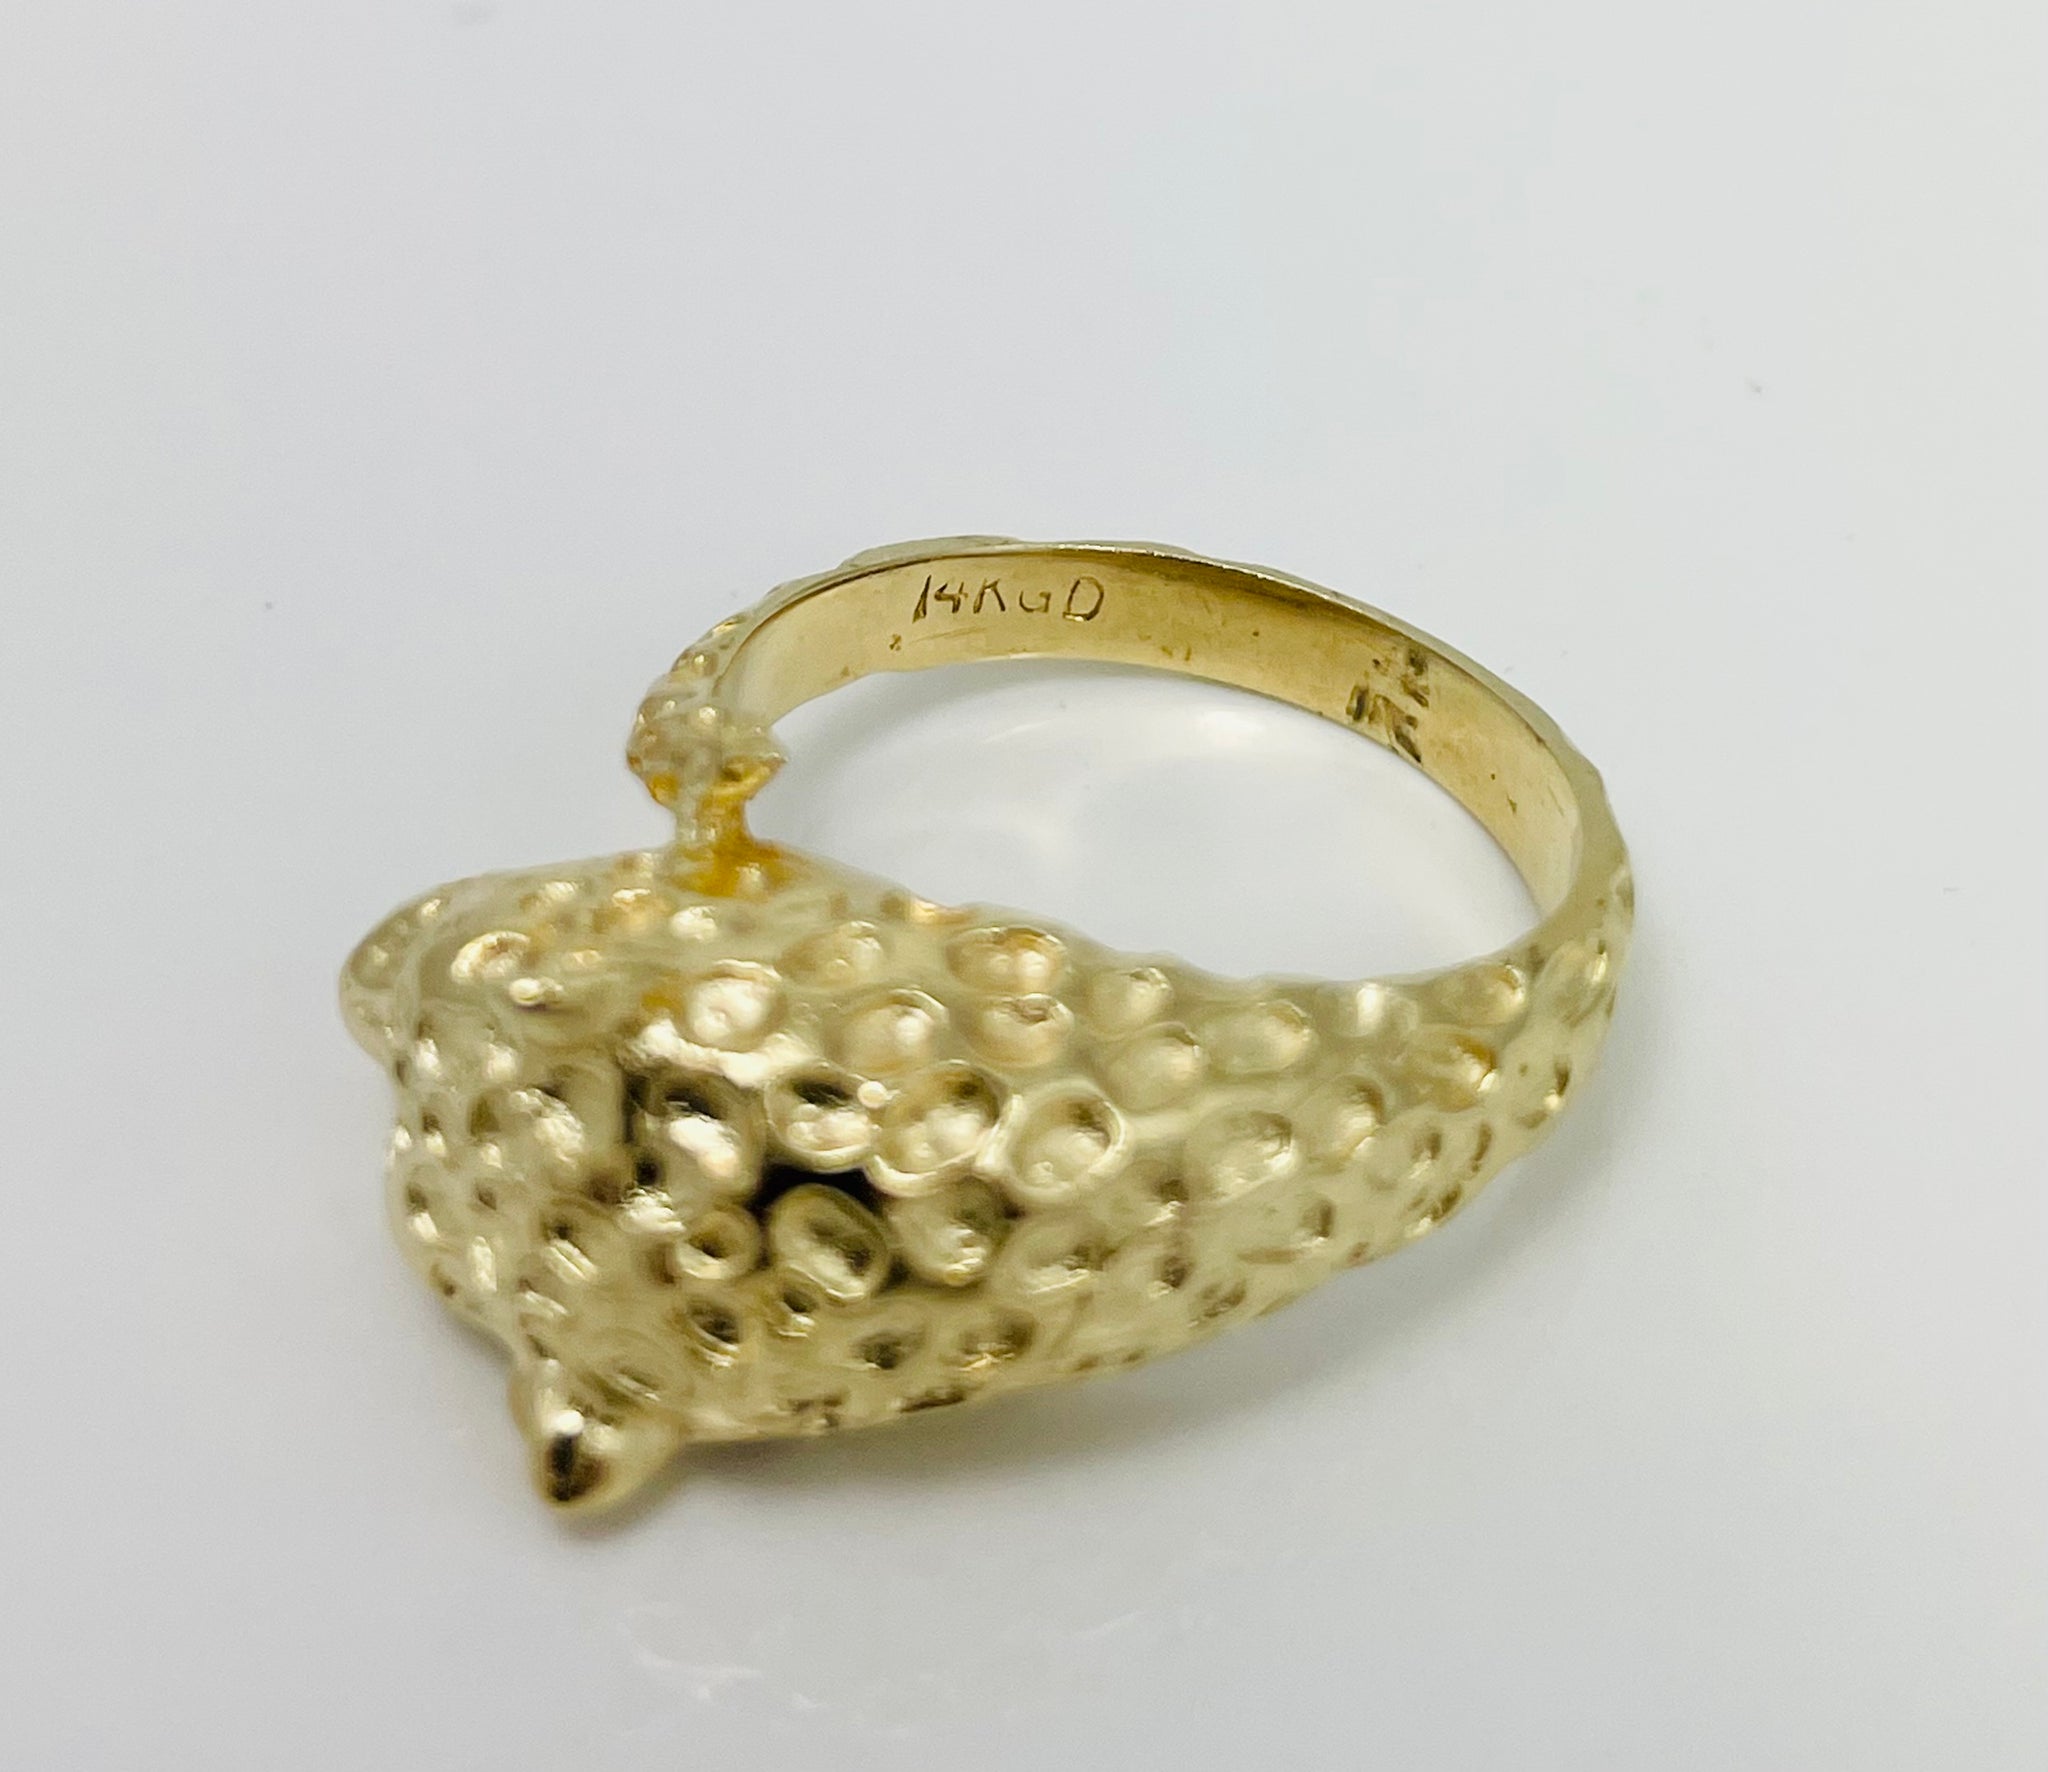 Adorable 3D 14k Yellow Gold Cheetah Ring